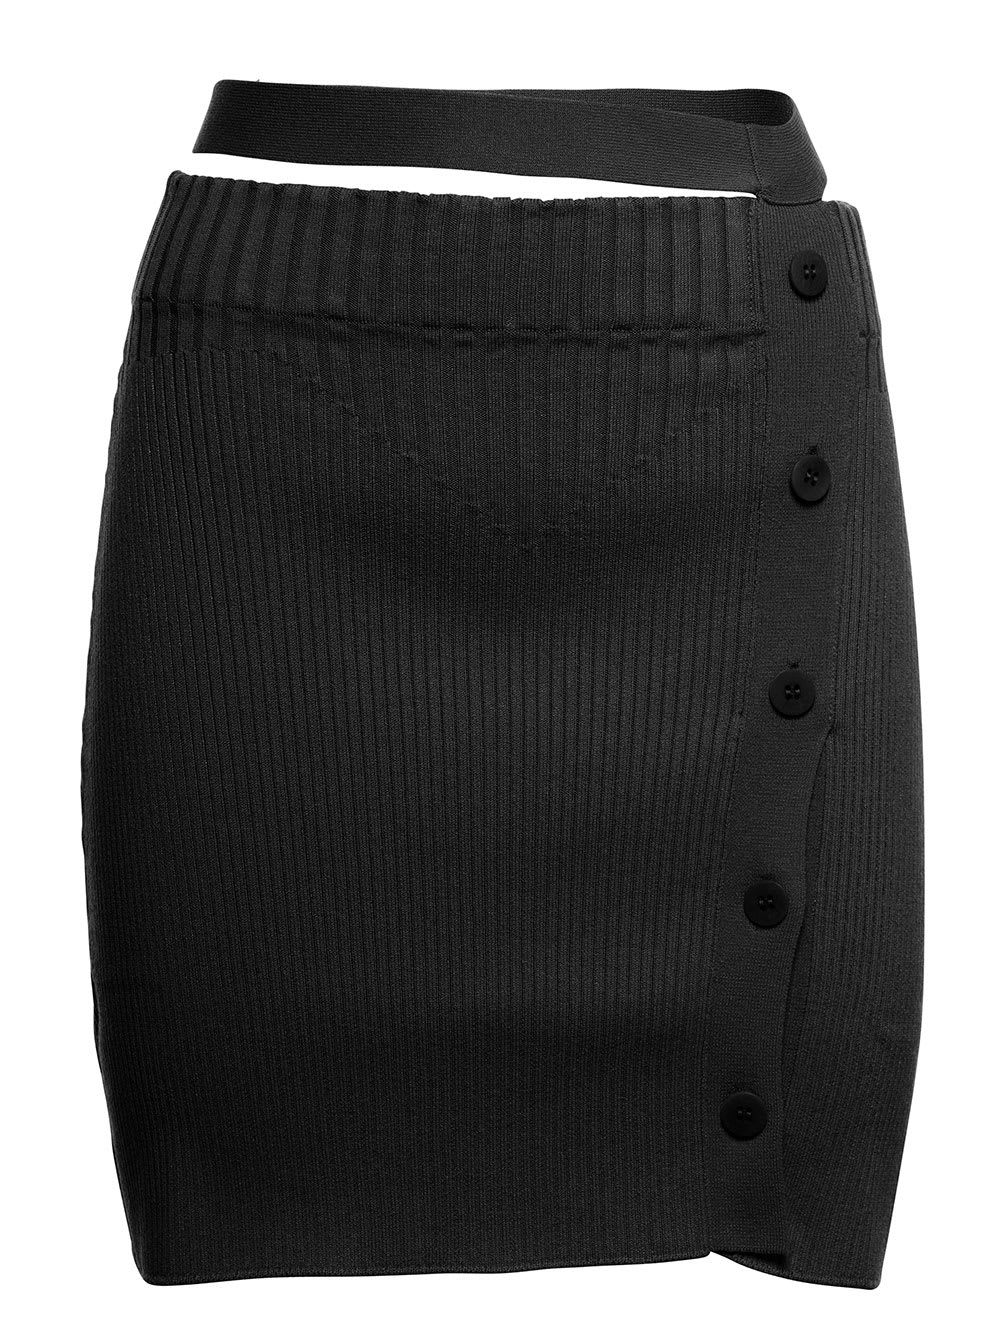 ANDREADAMO Andrea Adamo Woman Black Viscose Skirt With Cut Out Detail